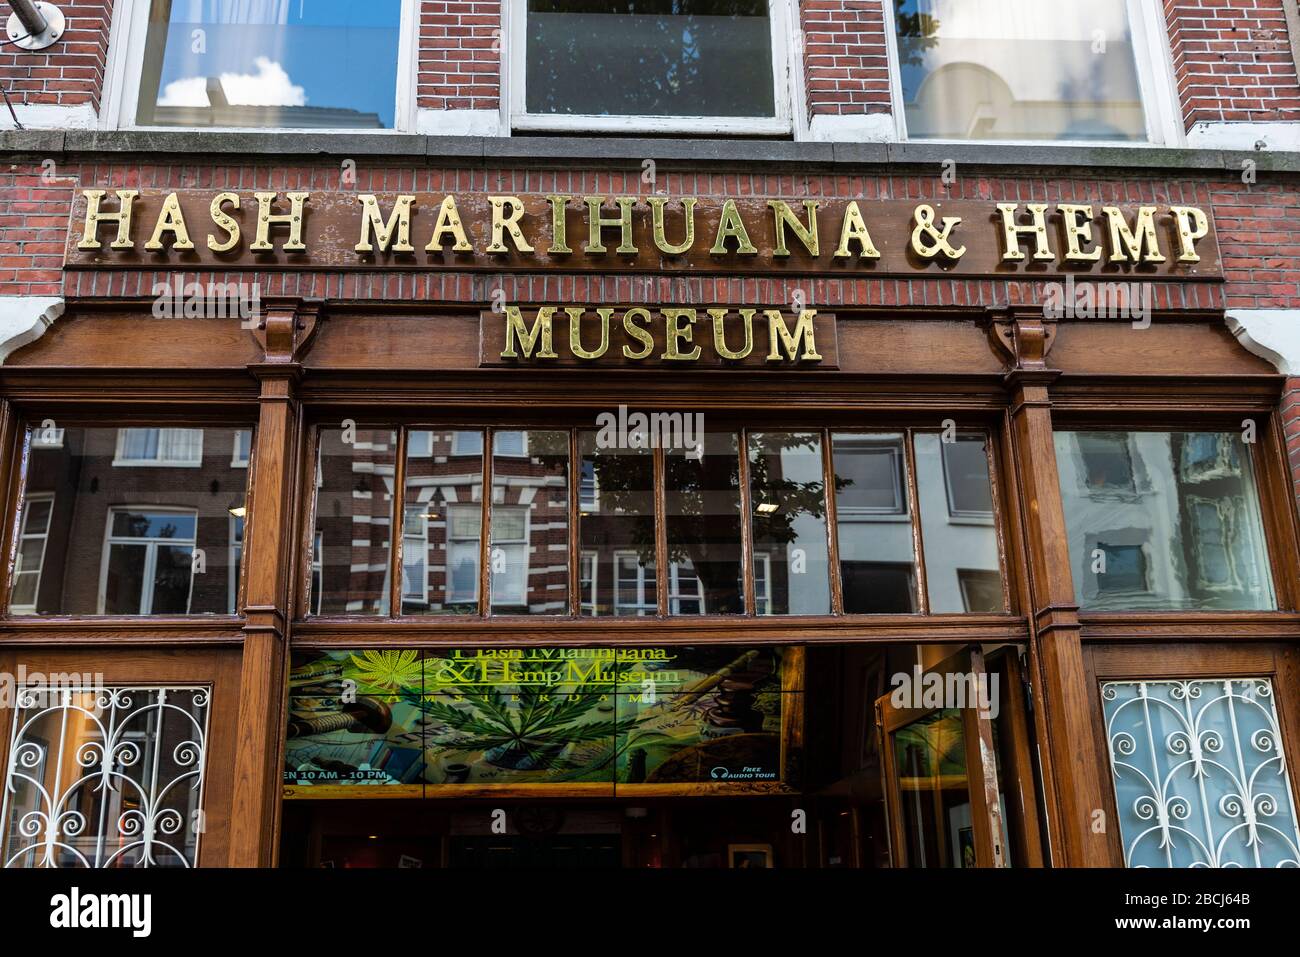 Amsterdam, Netherlands - September 7, 2018: Facade of the Hash Marihuana and Hemp Museum in Amsterdam, Netherlands Stock Photo